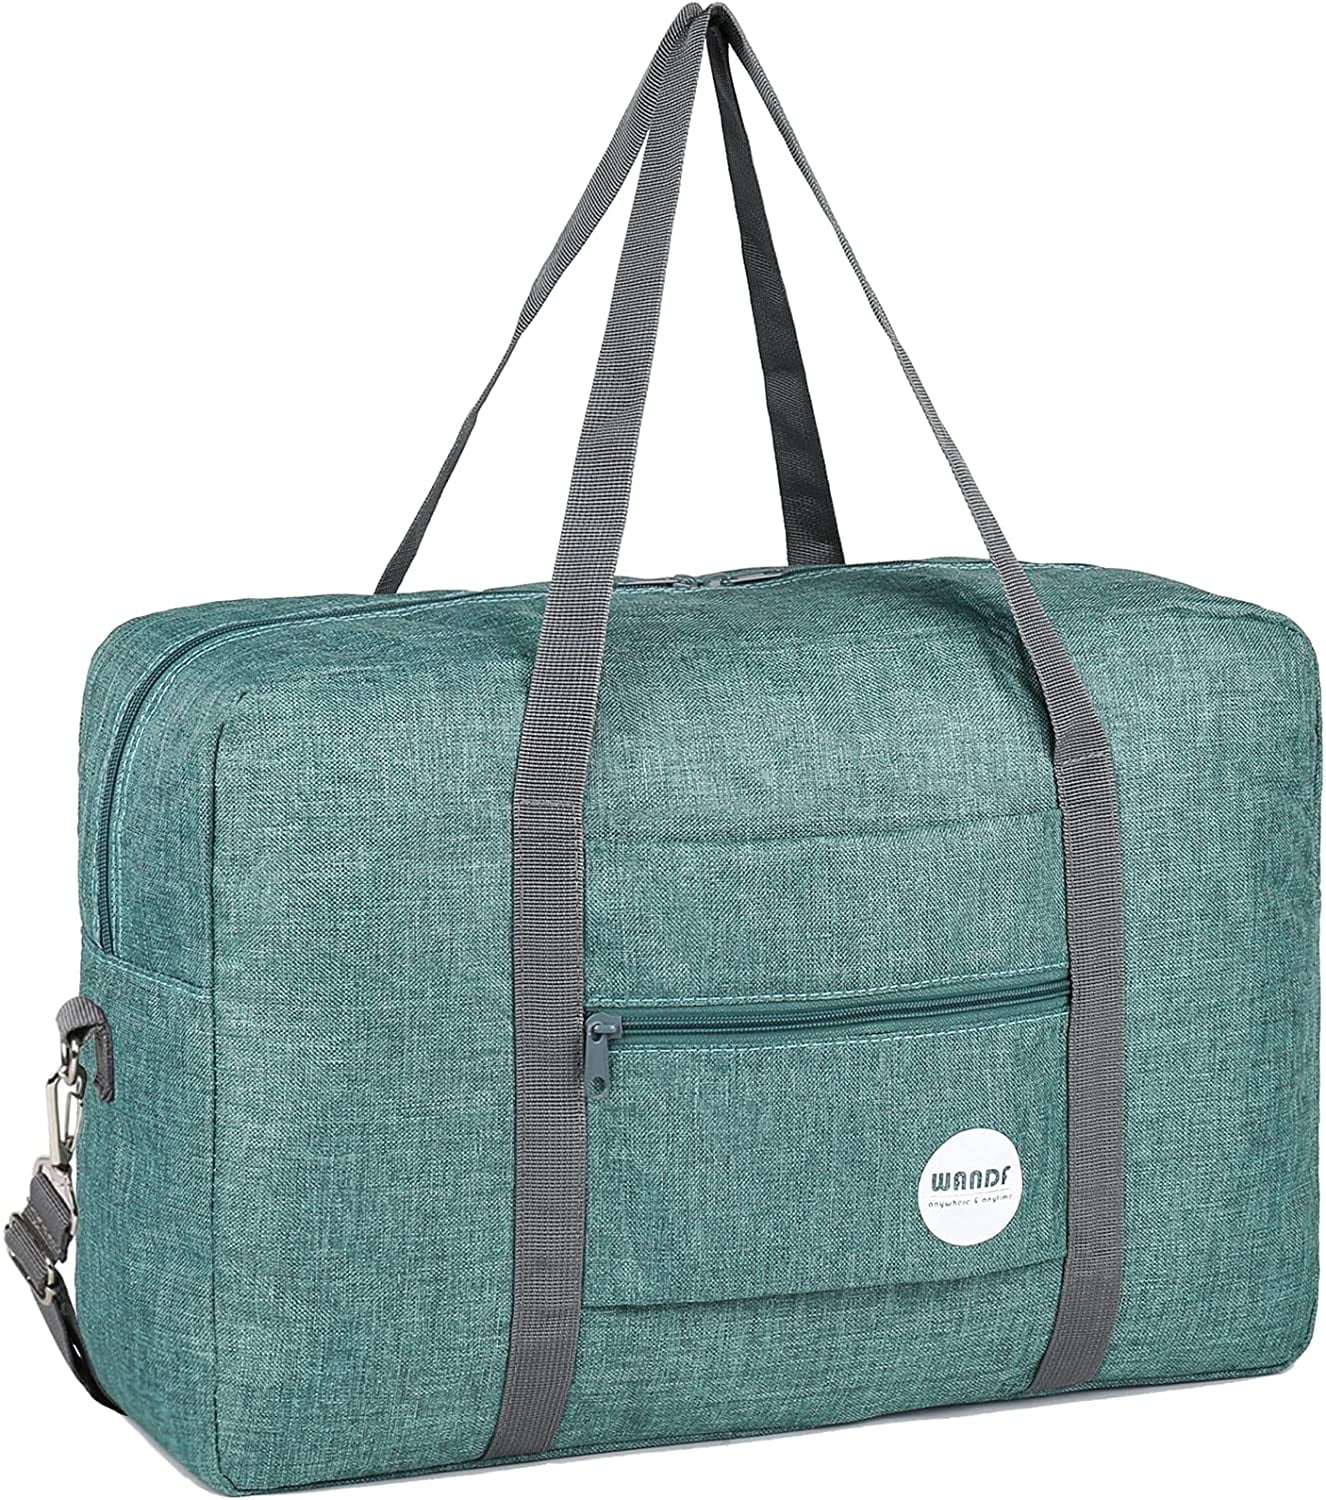 WANDF Travel Duffel Bag,Underseat Foldable Carry-on Luggage 